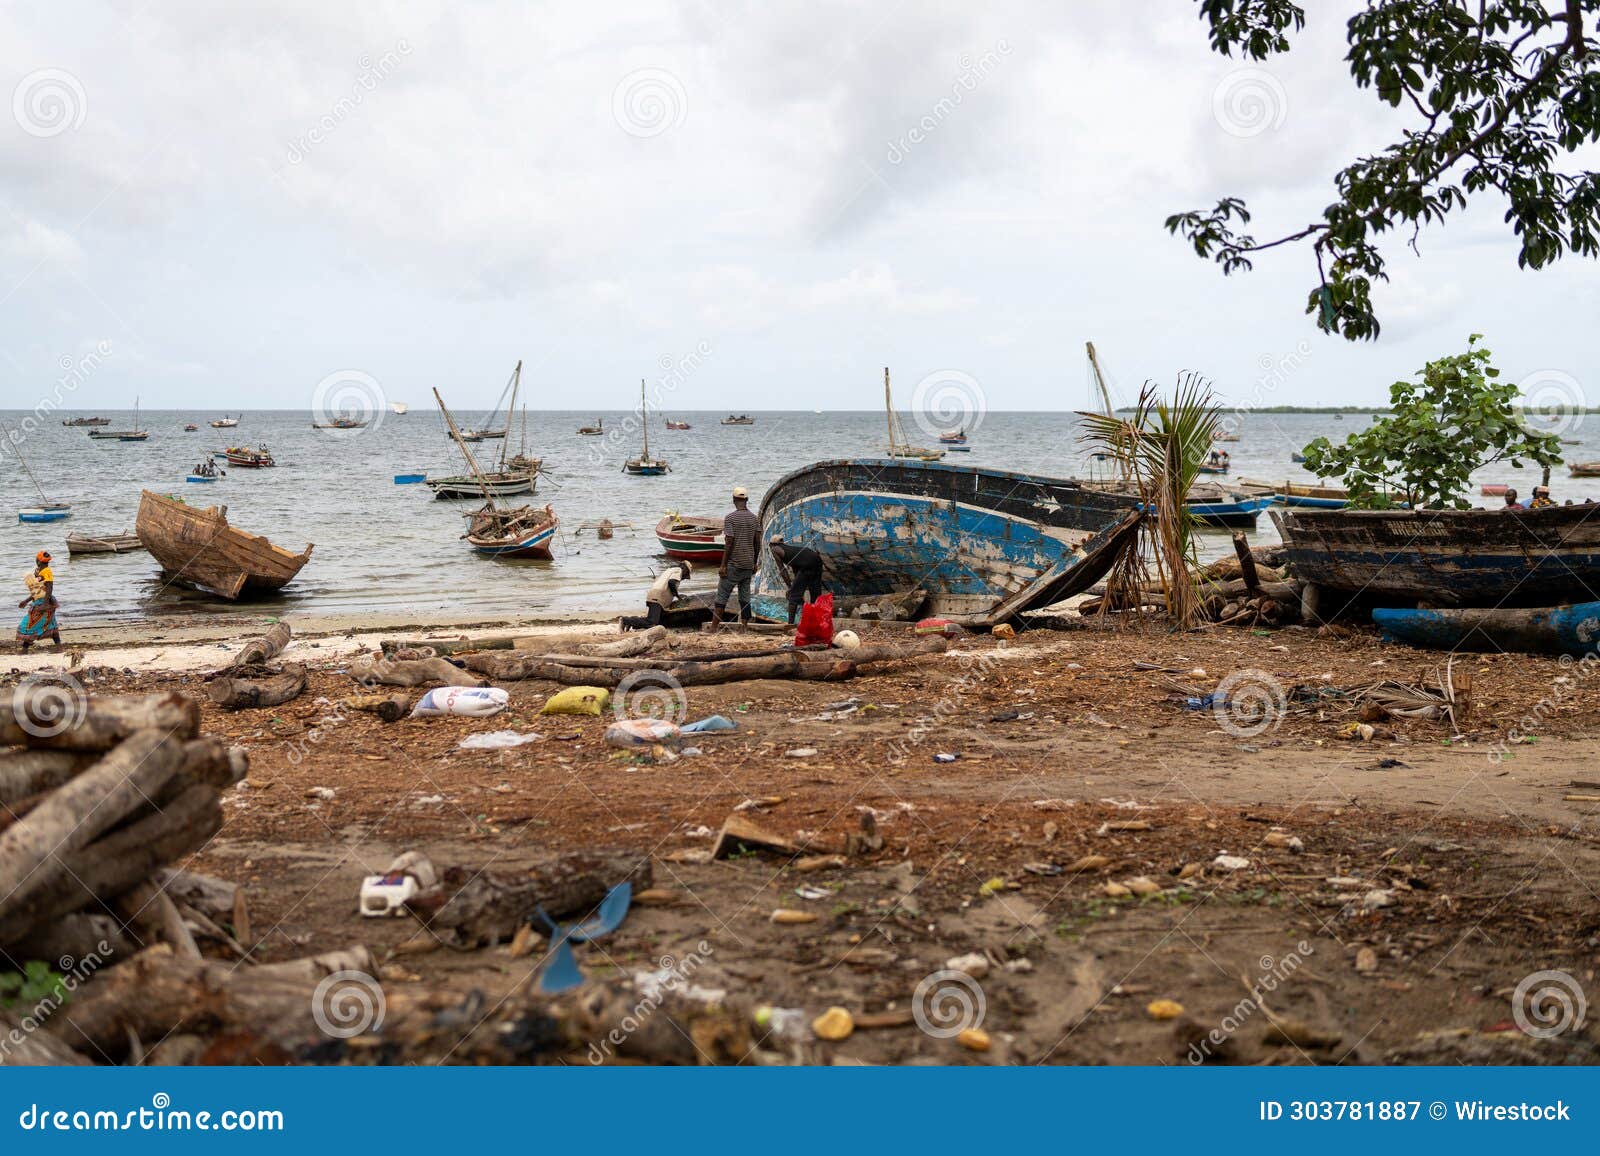 beach with boats in mocimboa da praia in cabo delgado province, mozambique